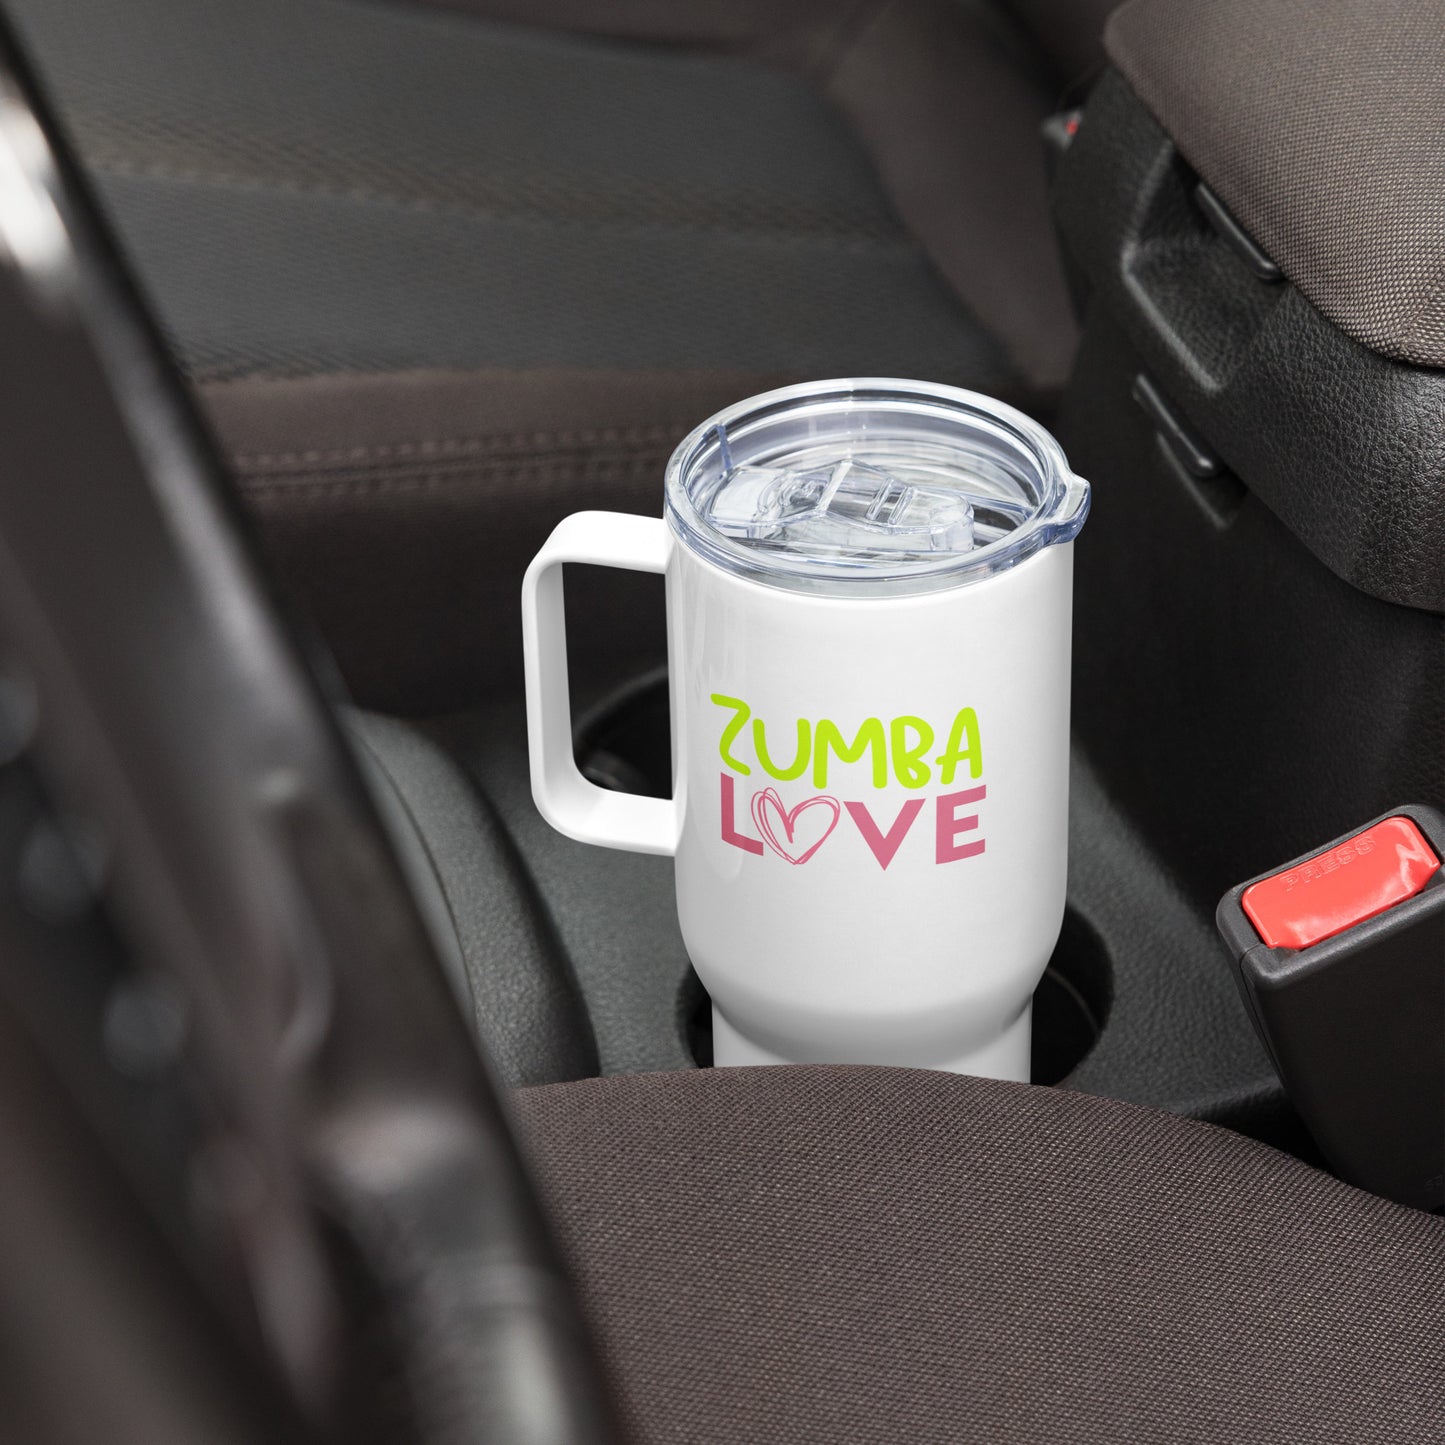 Zumba Love - Travel mug with a handle